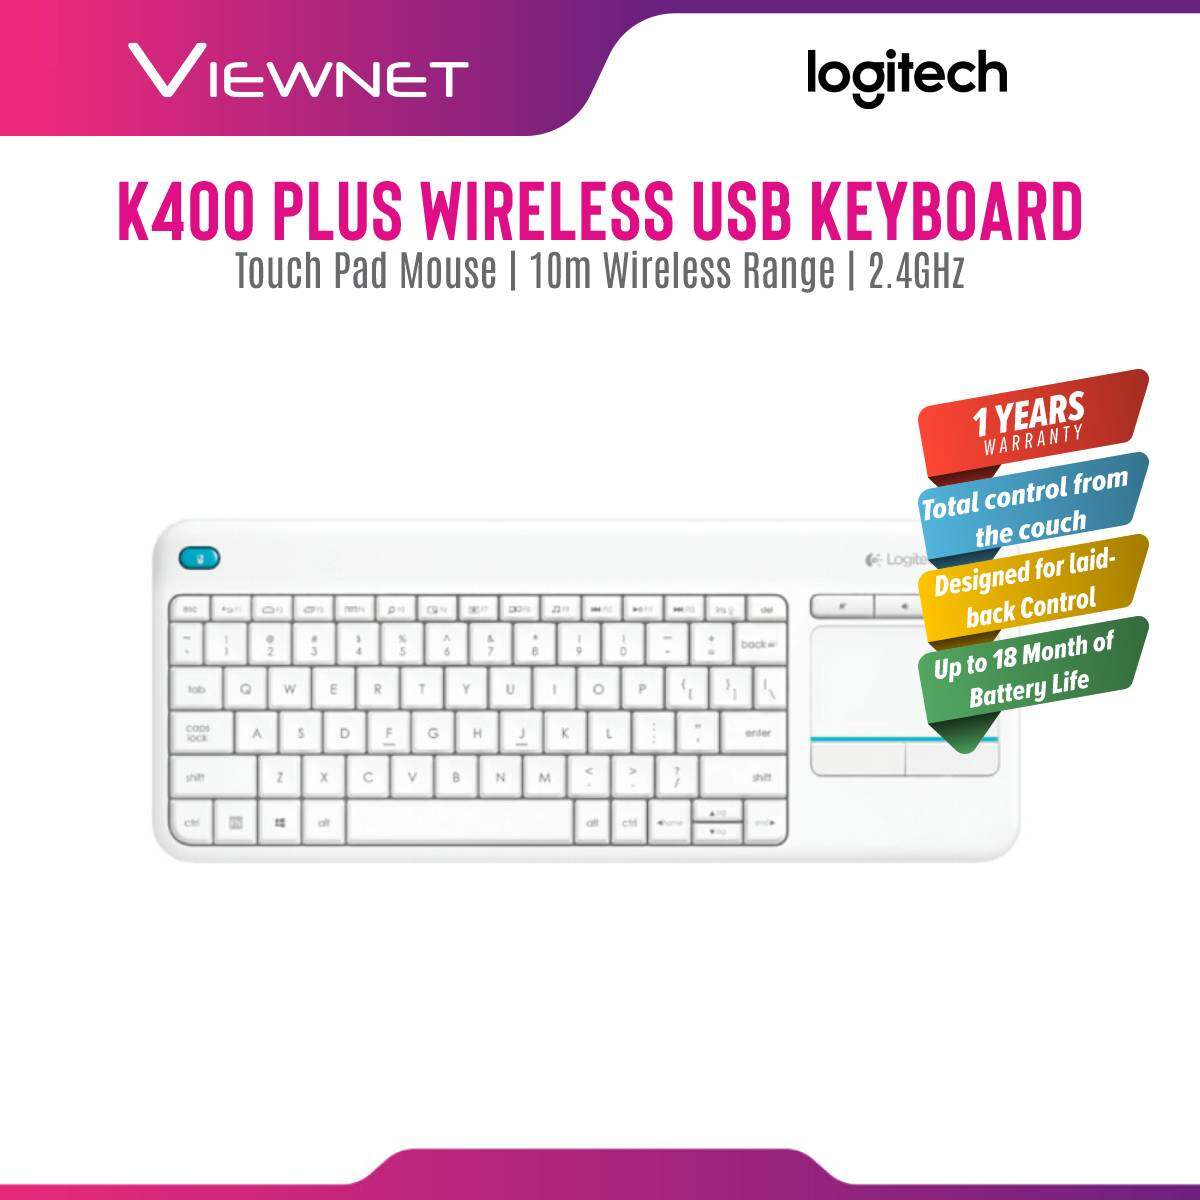 Logitech K400 Plus Wireless Touch Keyboard - Black / White